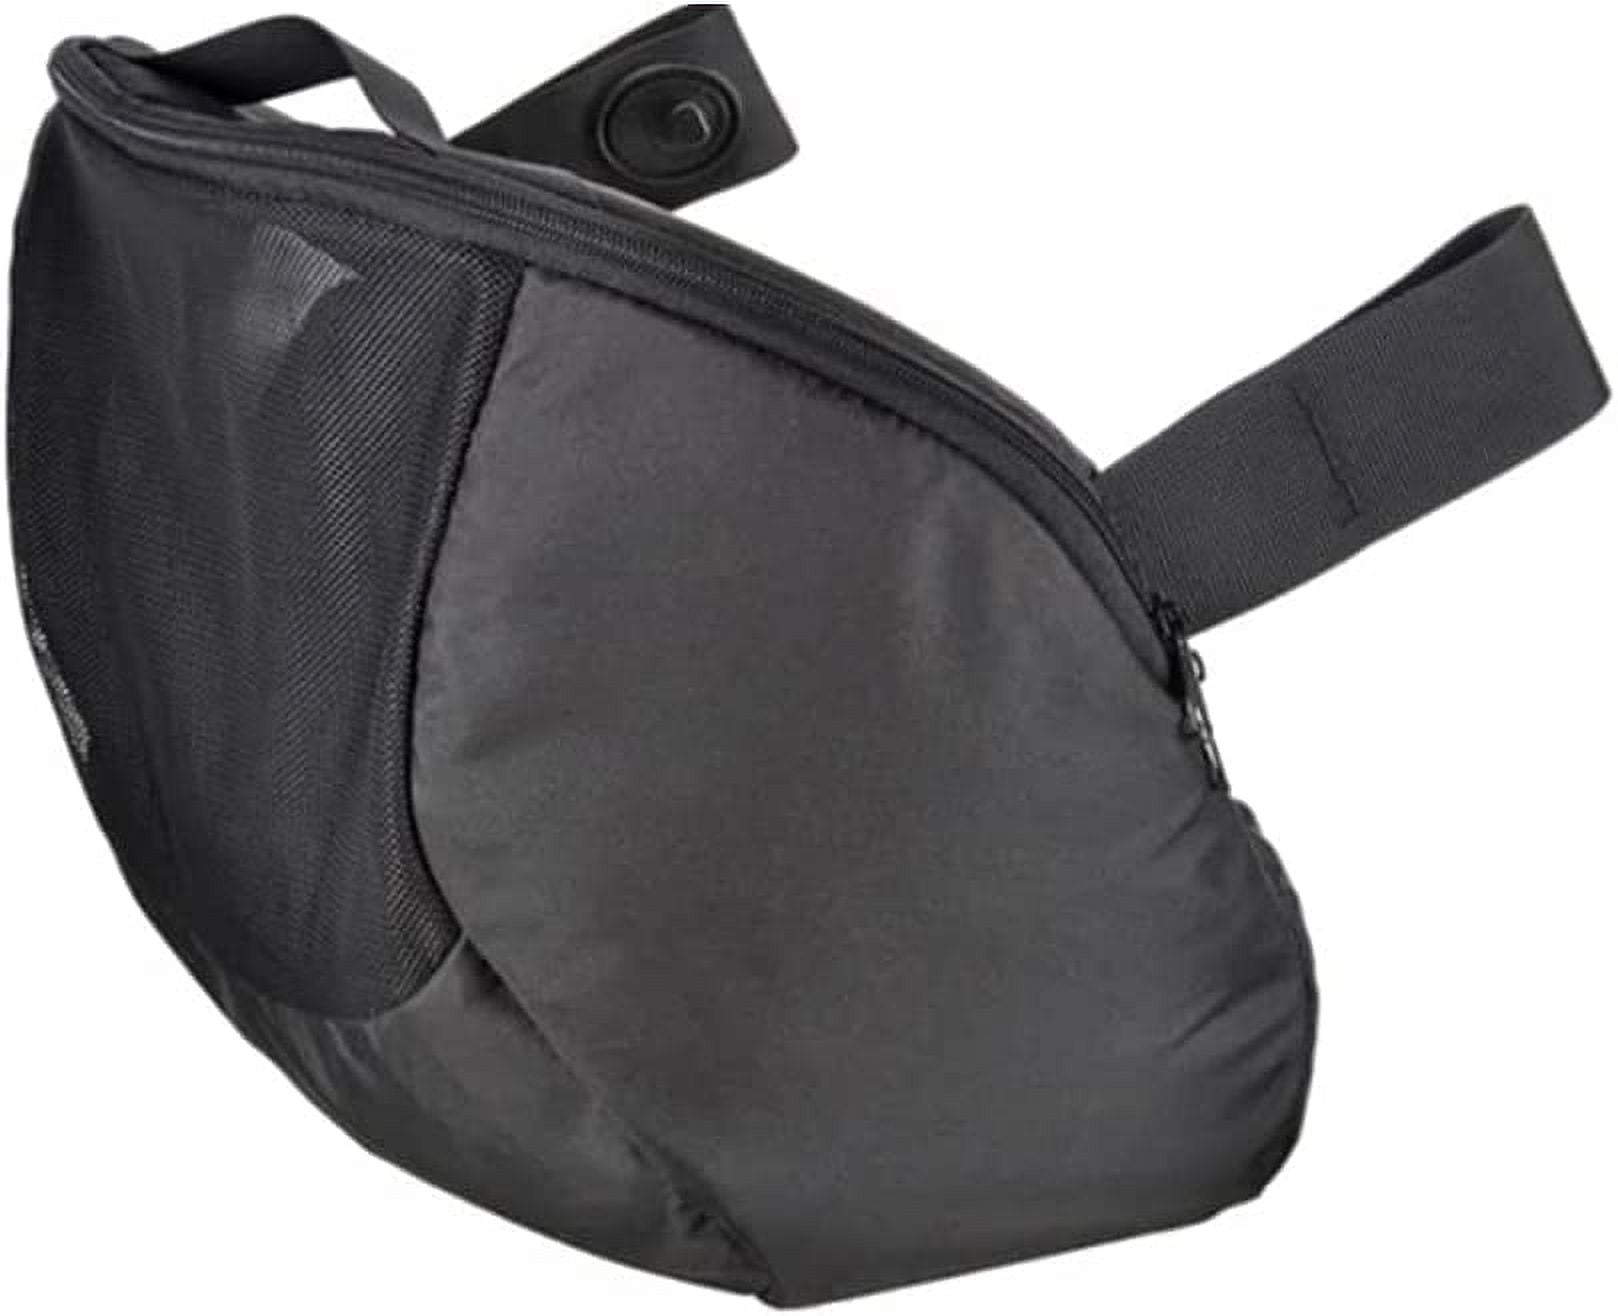 kilofly 2-in-1 Diaper Bag Insert Stroller Organizer with 2 Attachable  Straps 